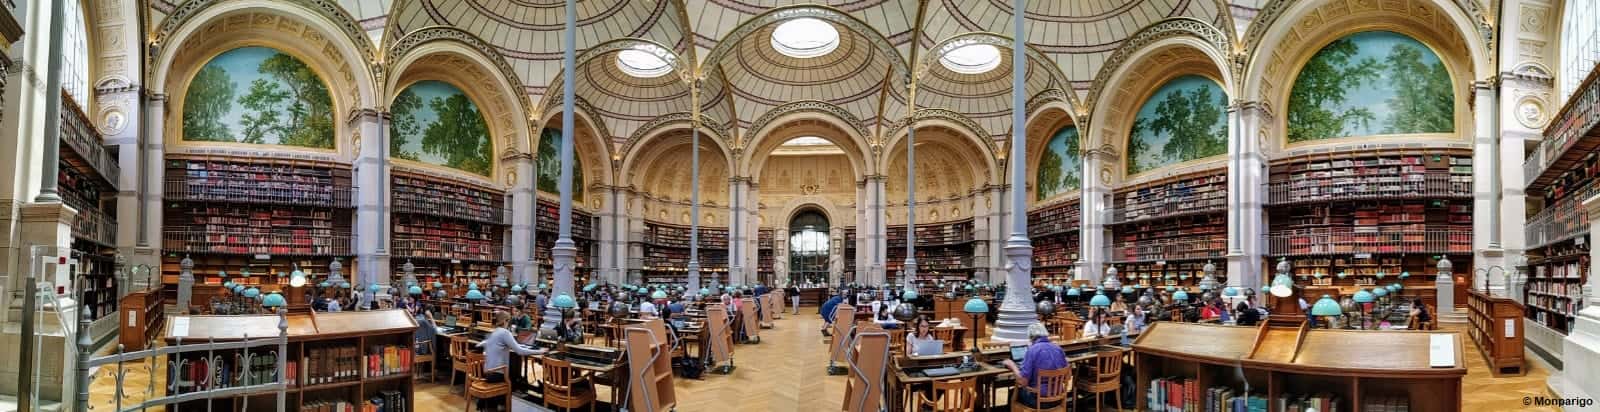 Panorámica de la sala Larouste Biblioteca Nacional de Francia